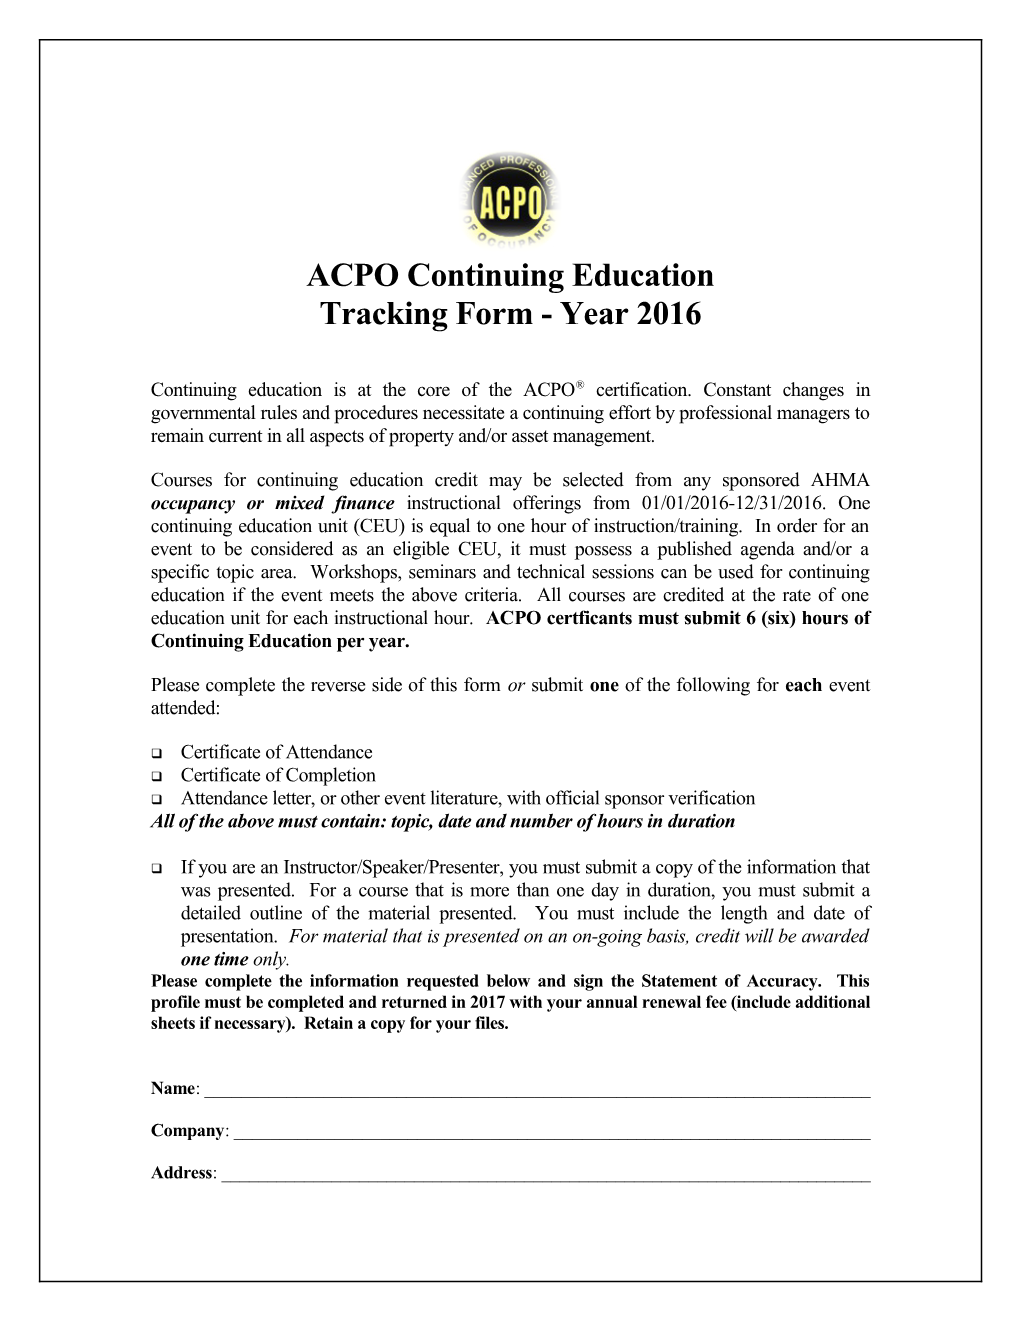 ACPO Continuing Education